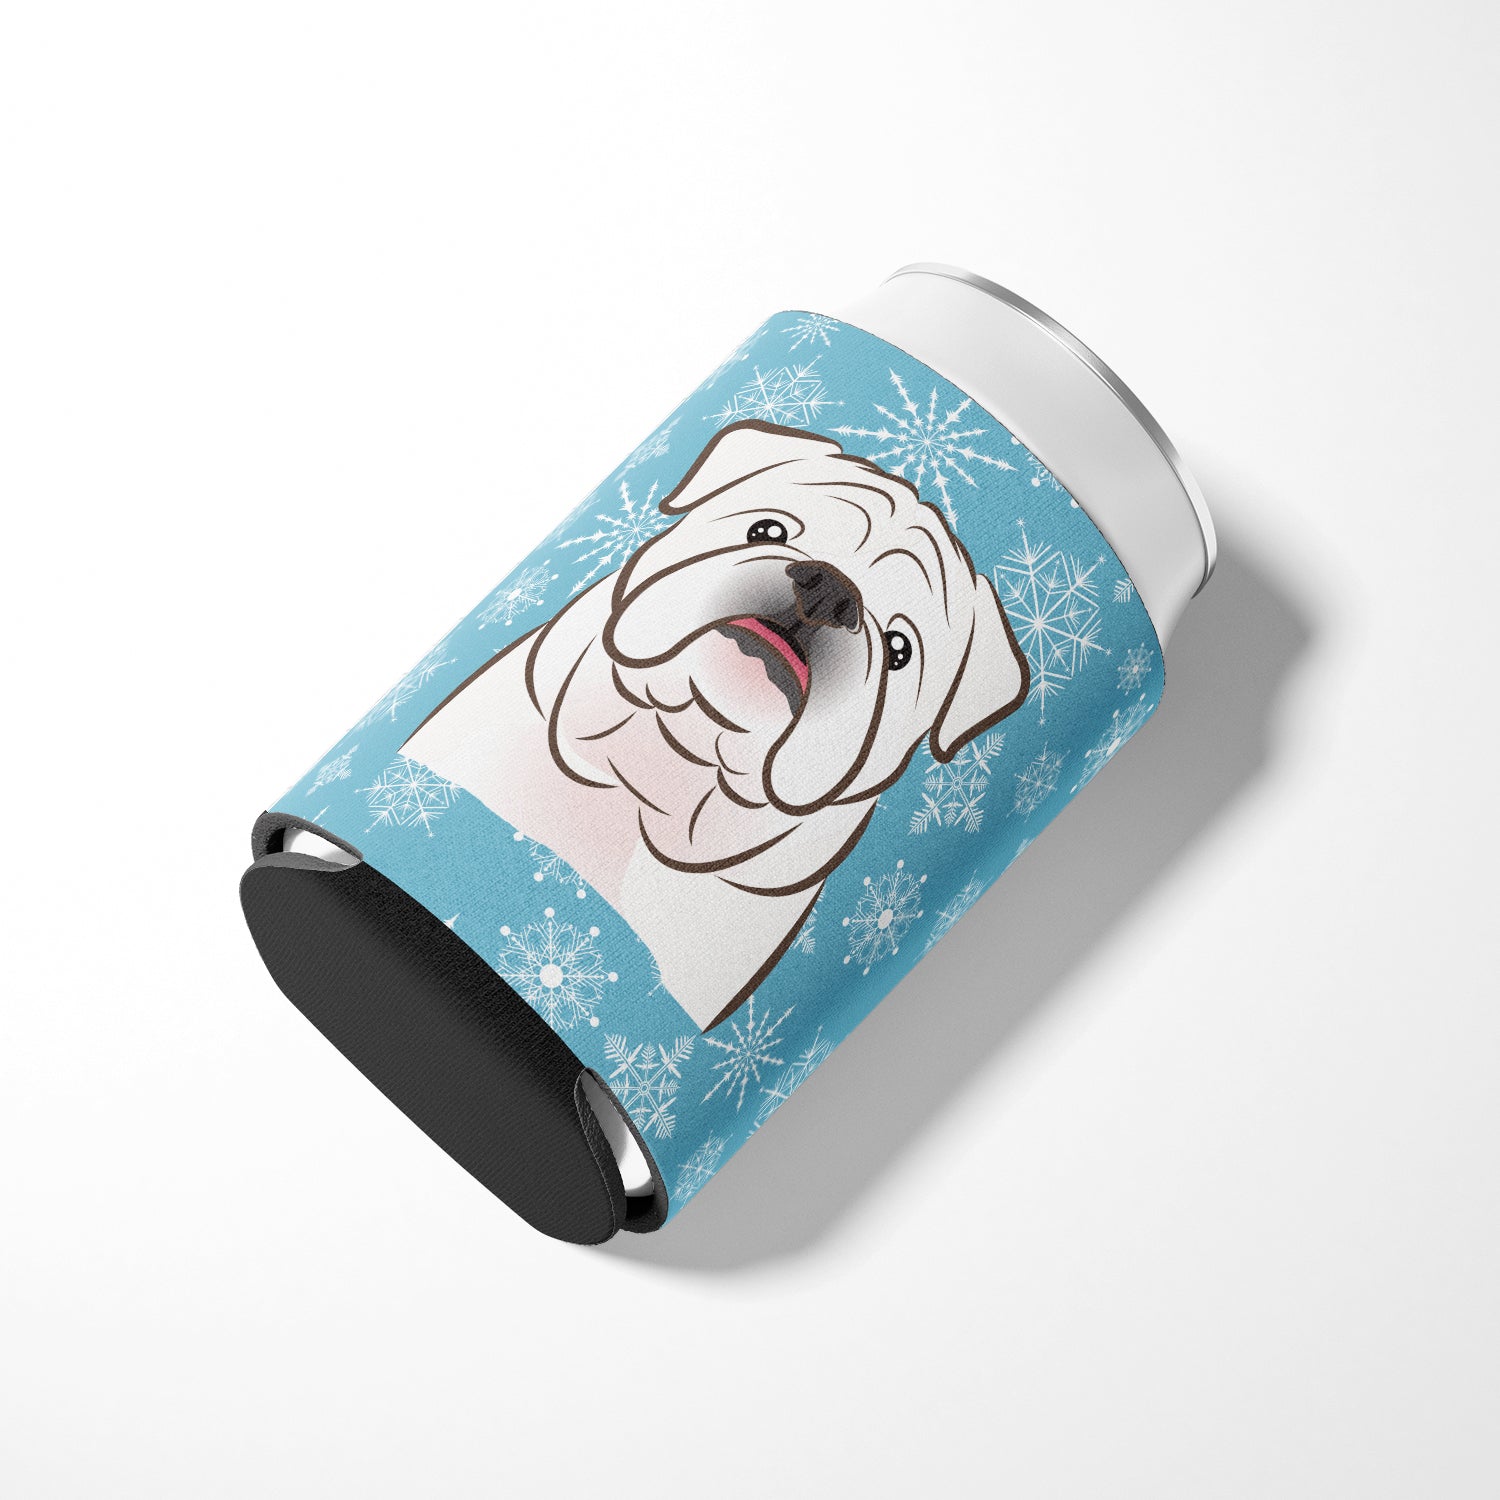 Snowflake White English Bulldog  Can or Bottle Hugger BB1654CC.